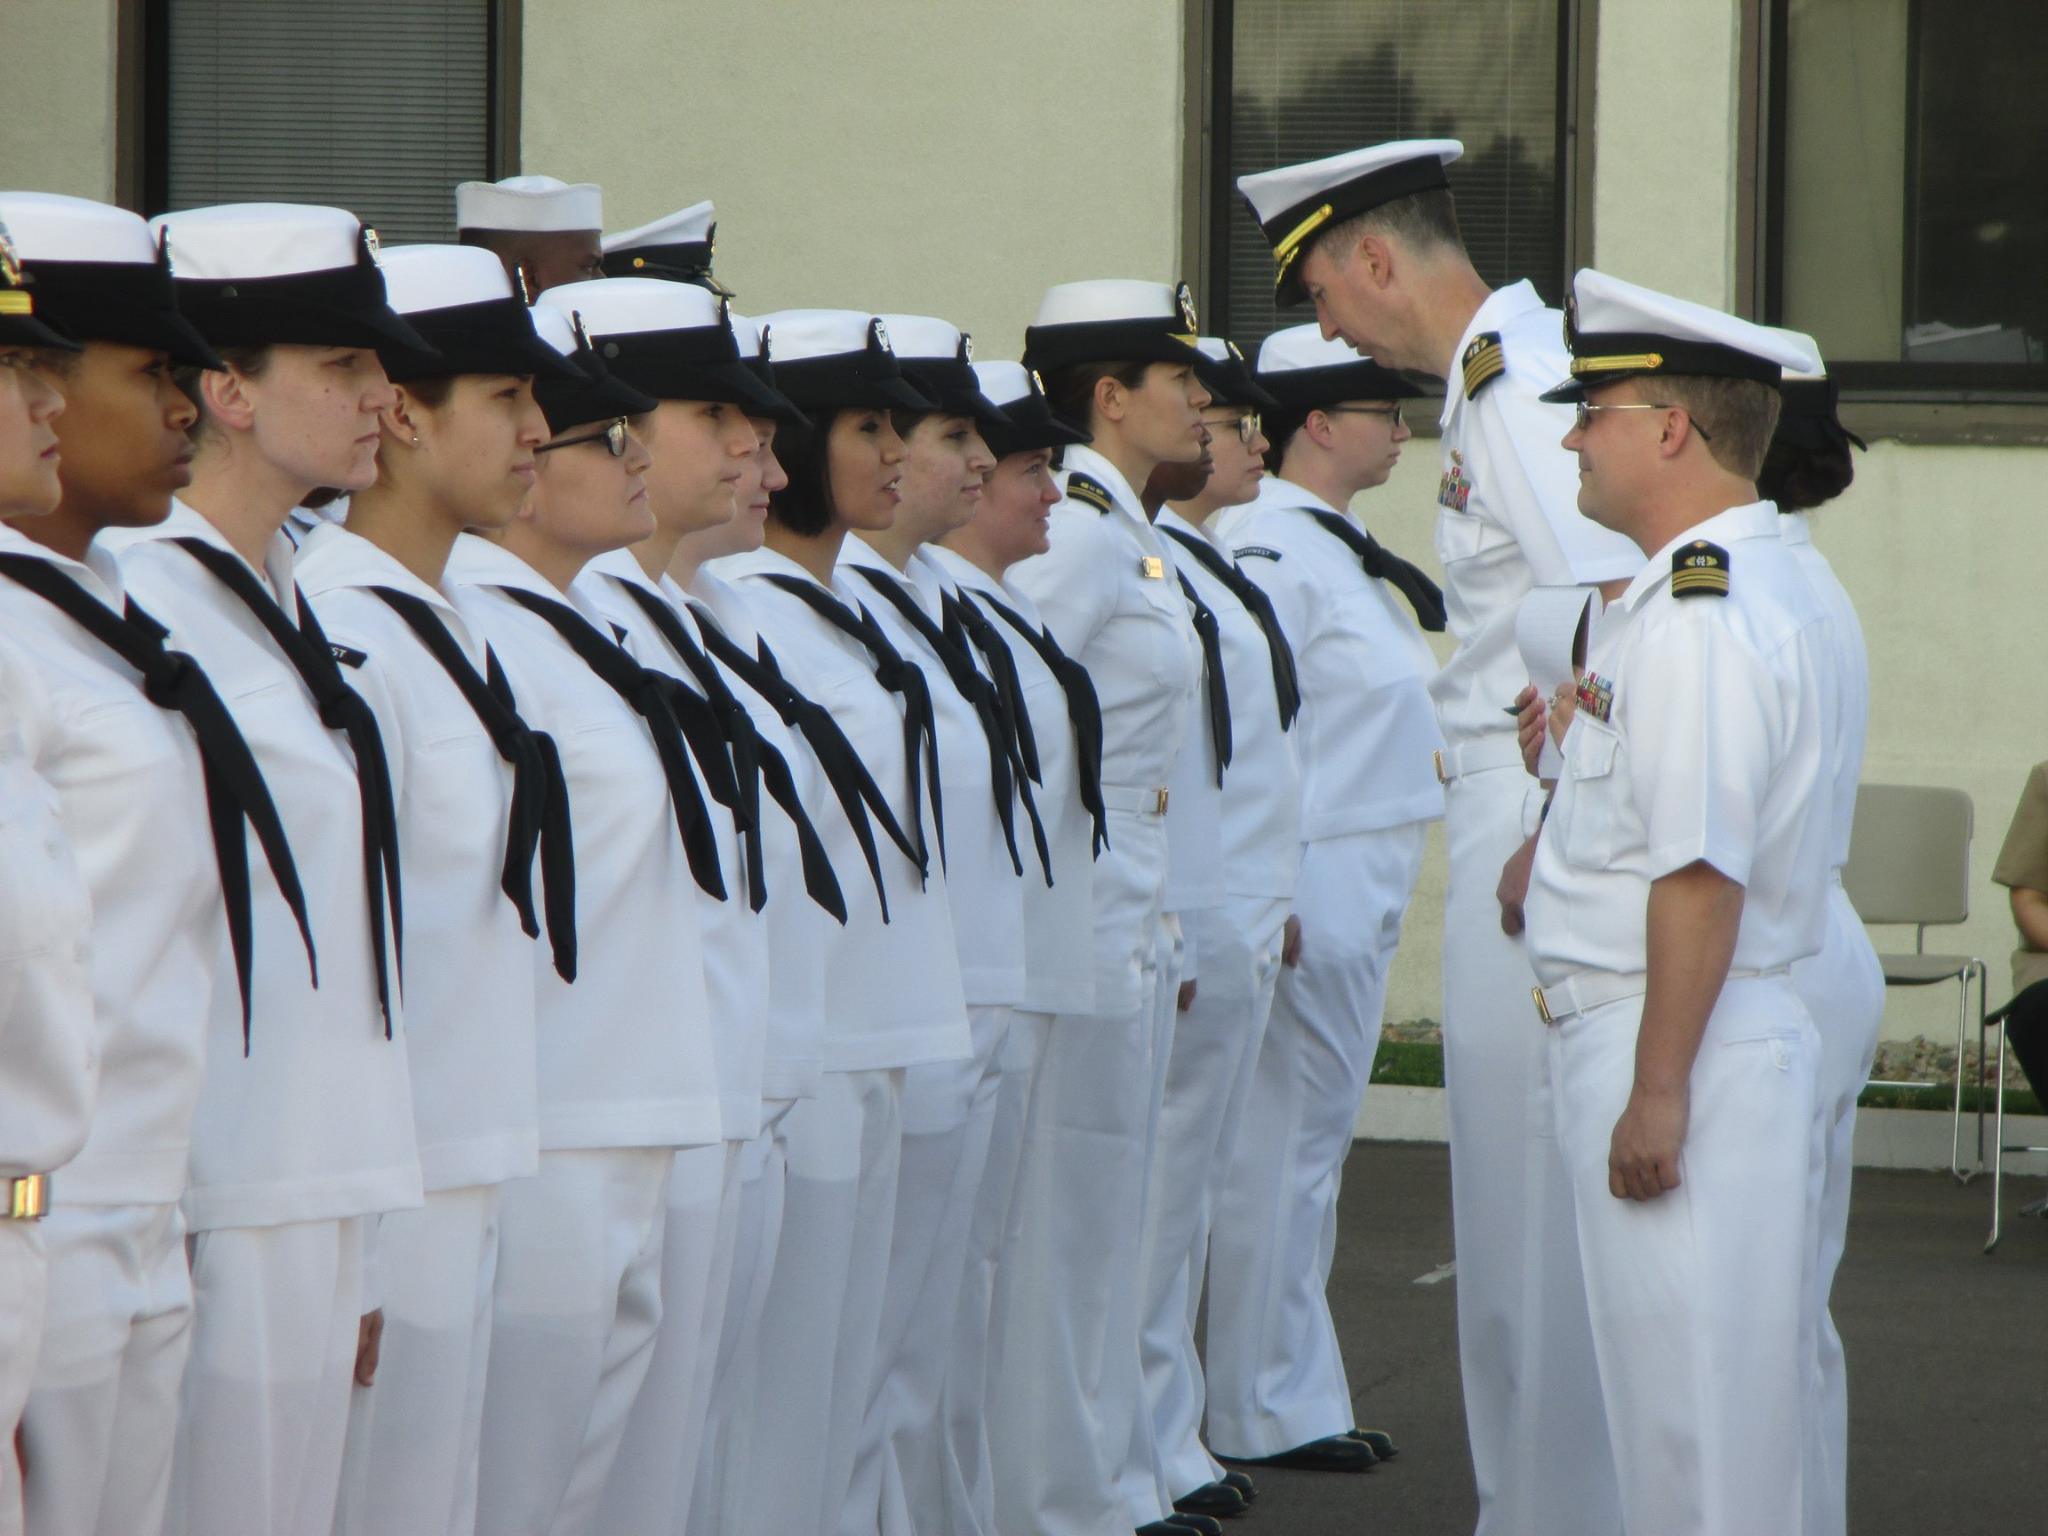 Dress Uniform Inspection. U.S. Navy JAG Corps